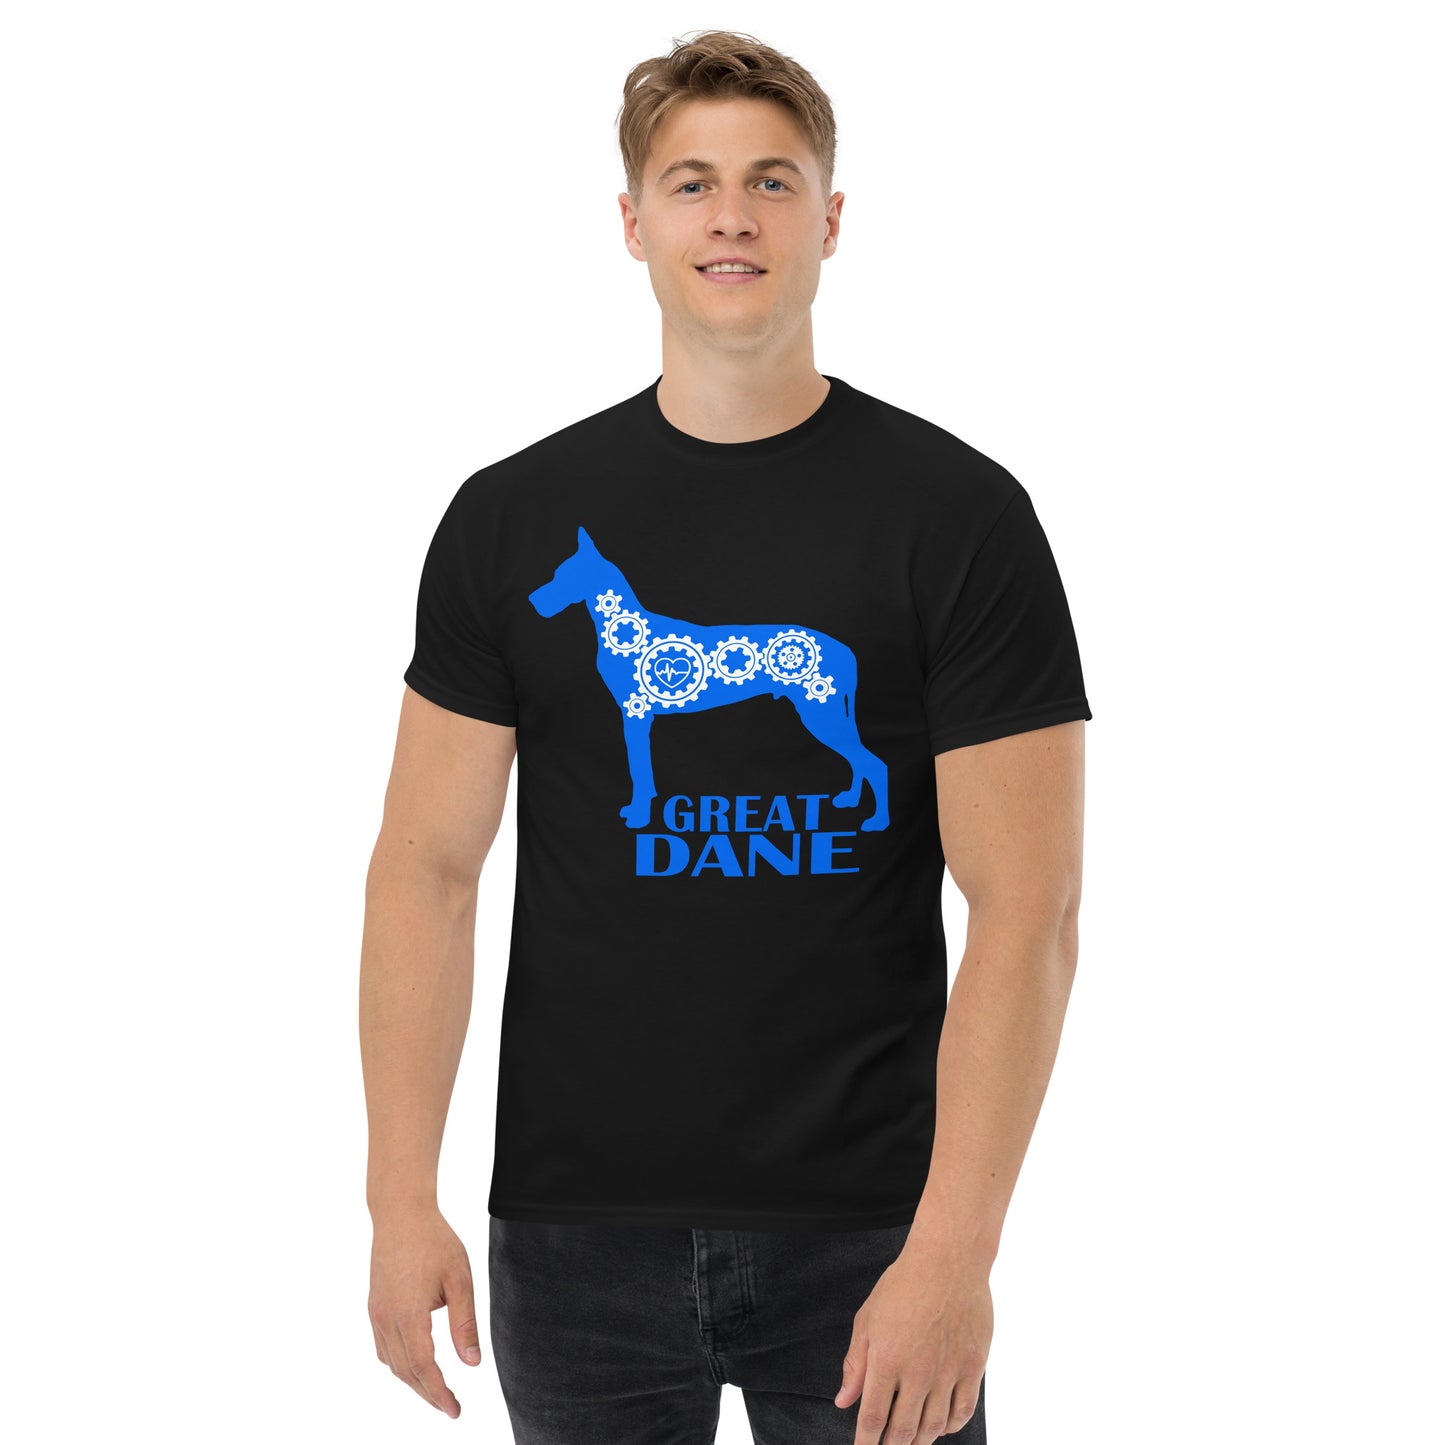 Great Dane Bionic men’s black t-shirt by Dog Artistry.